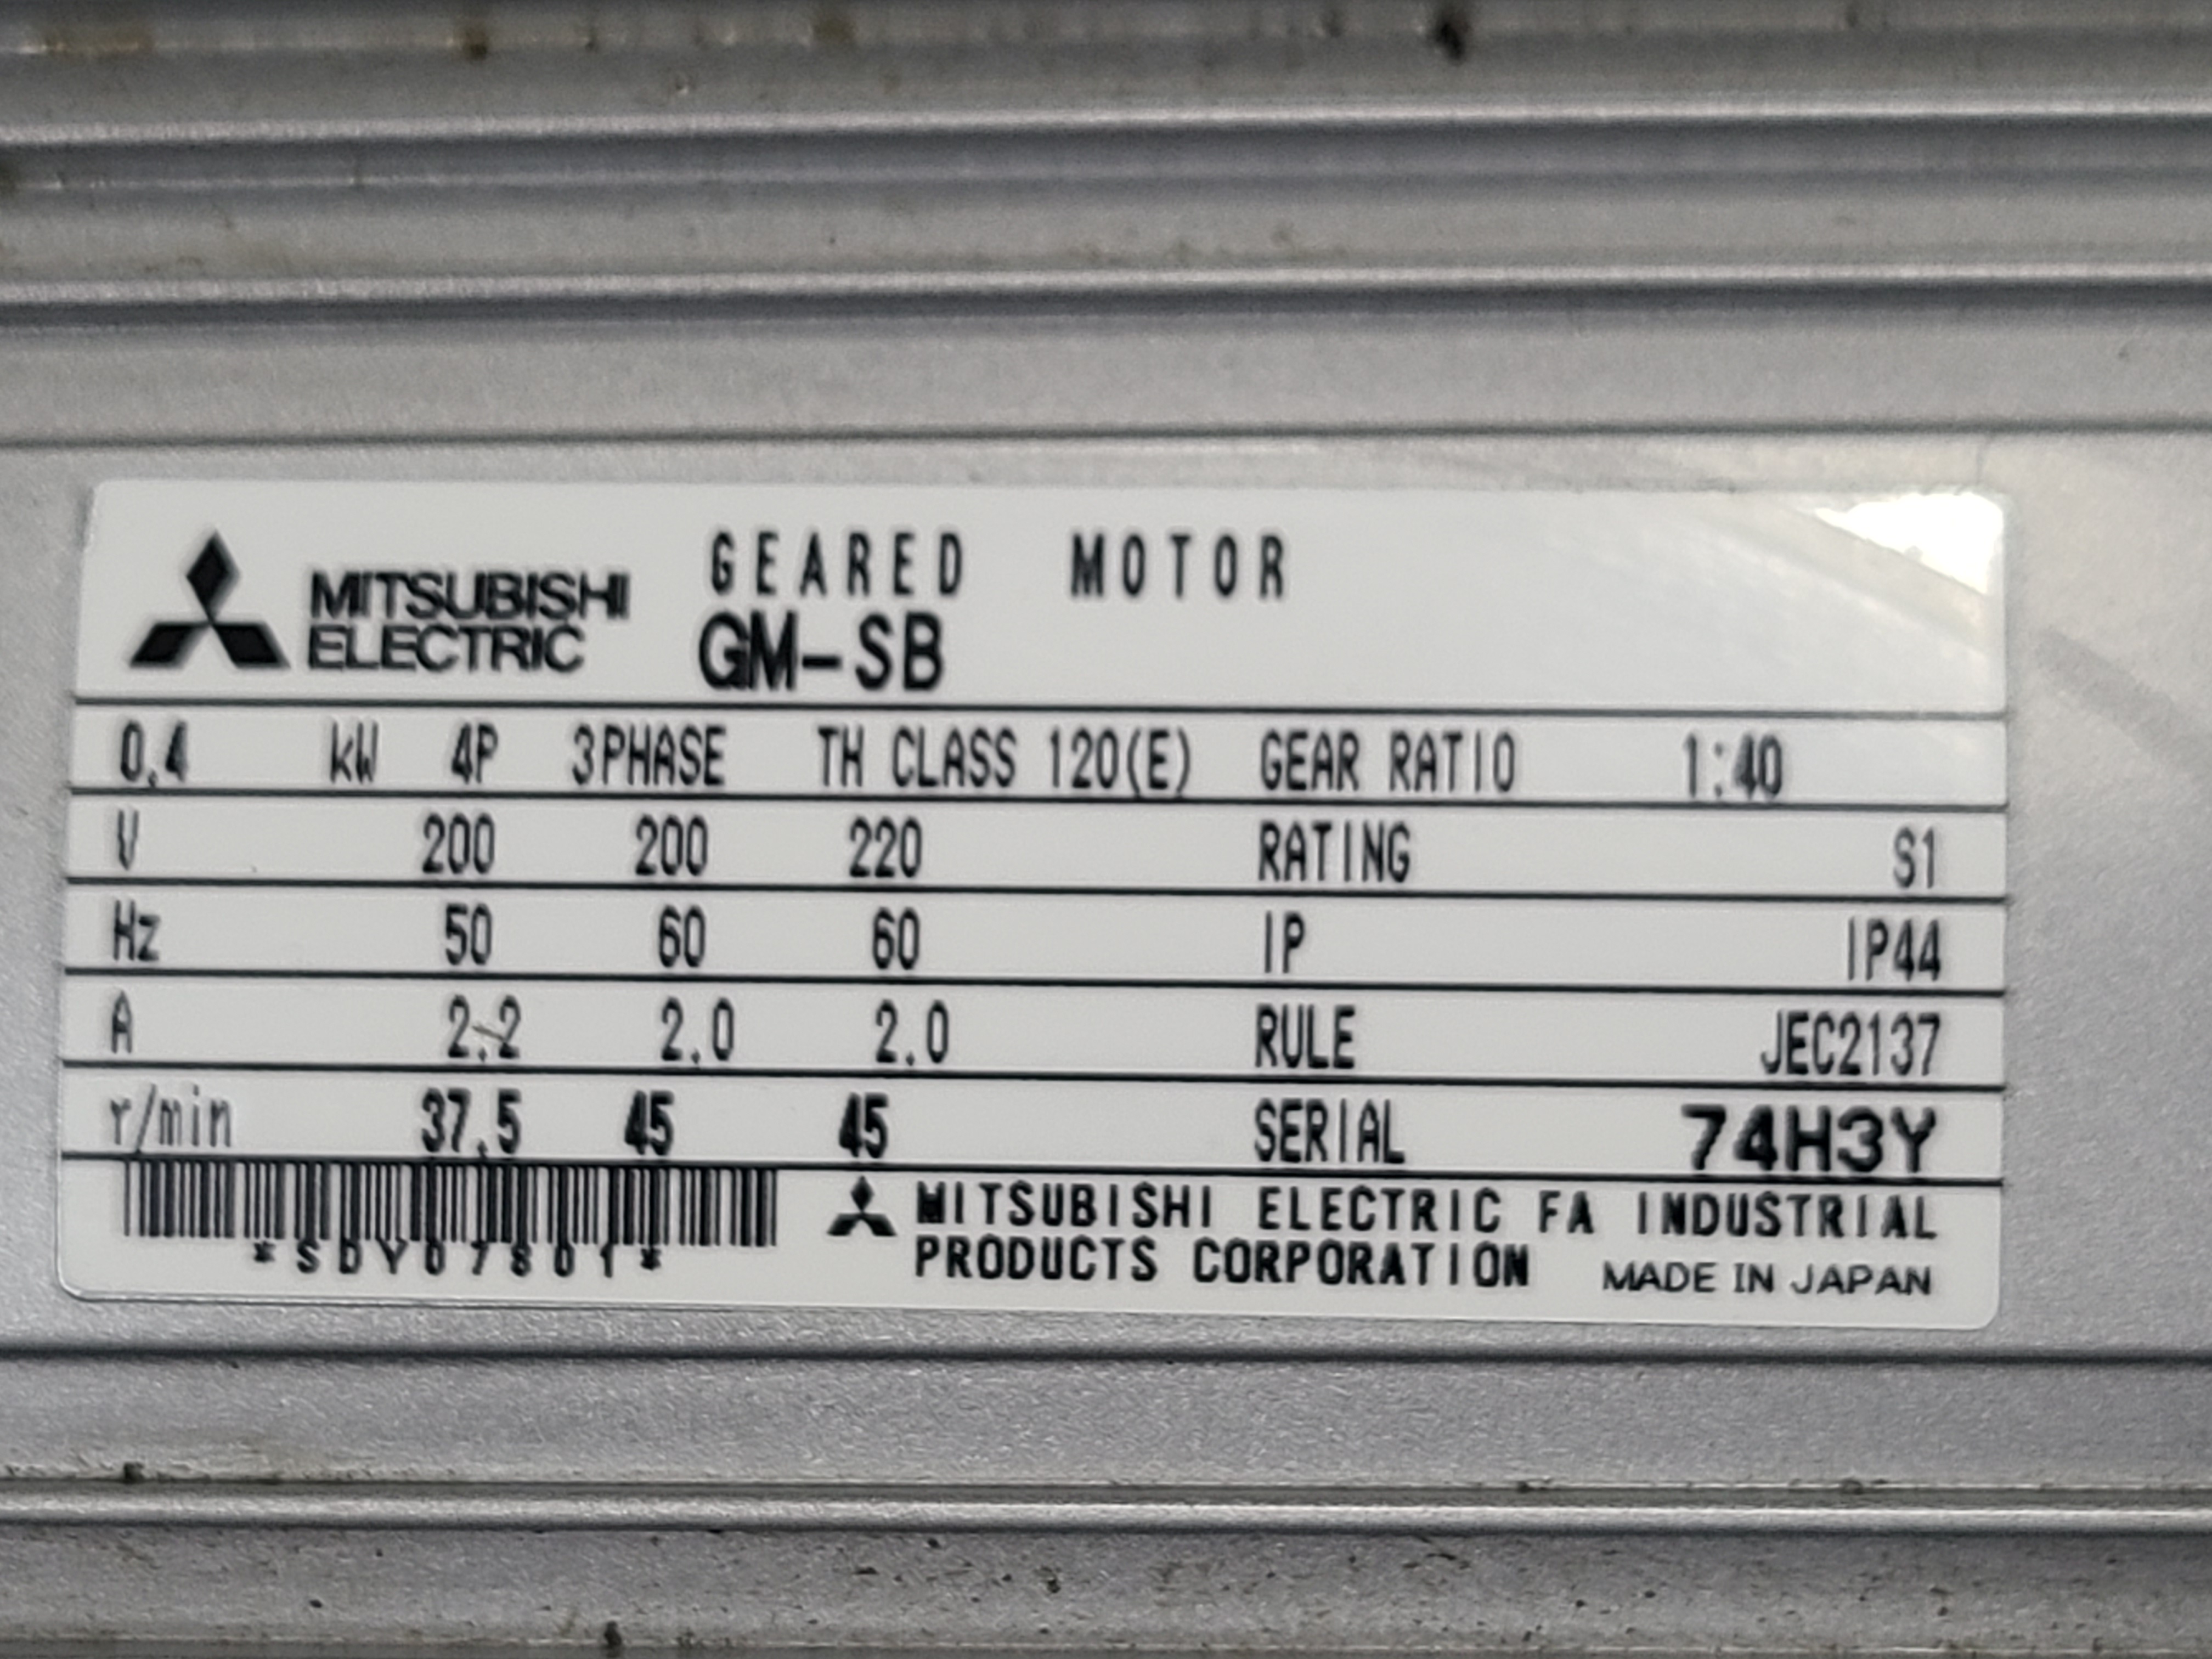 AC BRAKE GEARED MOTOR MITSUBISHI GM-SB 0.4KW 3PH (40:1, 20:1) 중고 미쓰비씨 브레이크 기어드모타